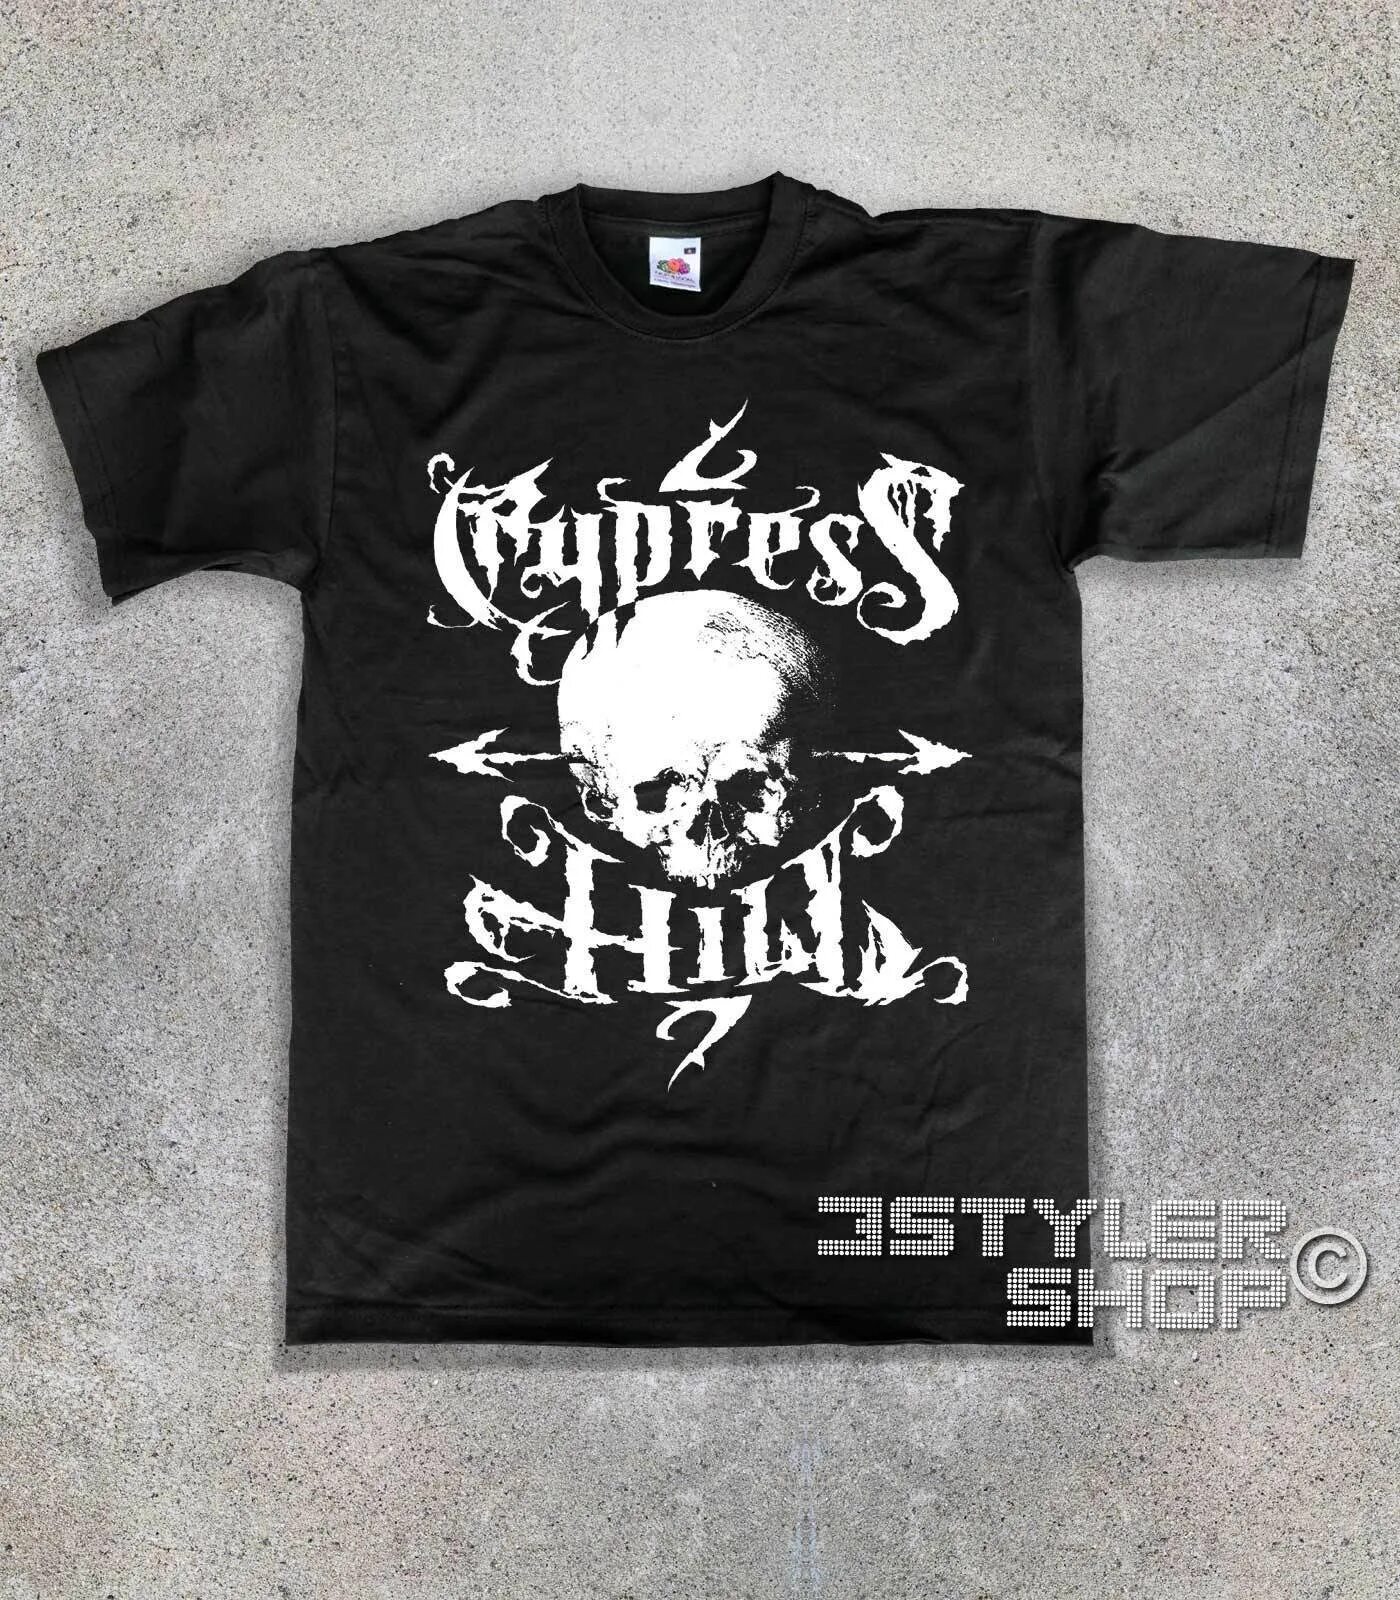 Футболка Сайпресс Хилл. The great Hill футболка. Cypress Hill фото. Insane in the Brain Cypress Hill обложка.